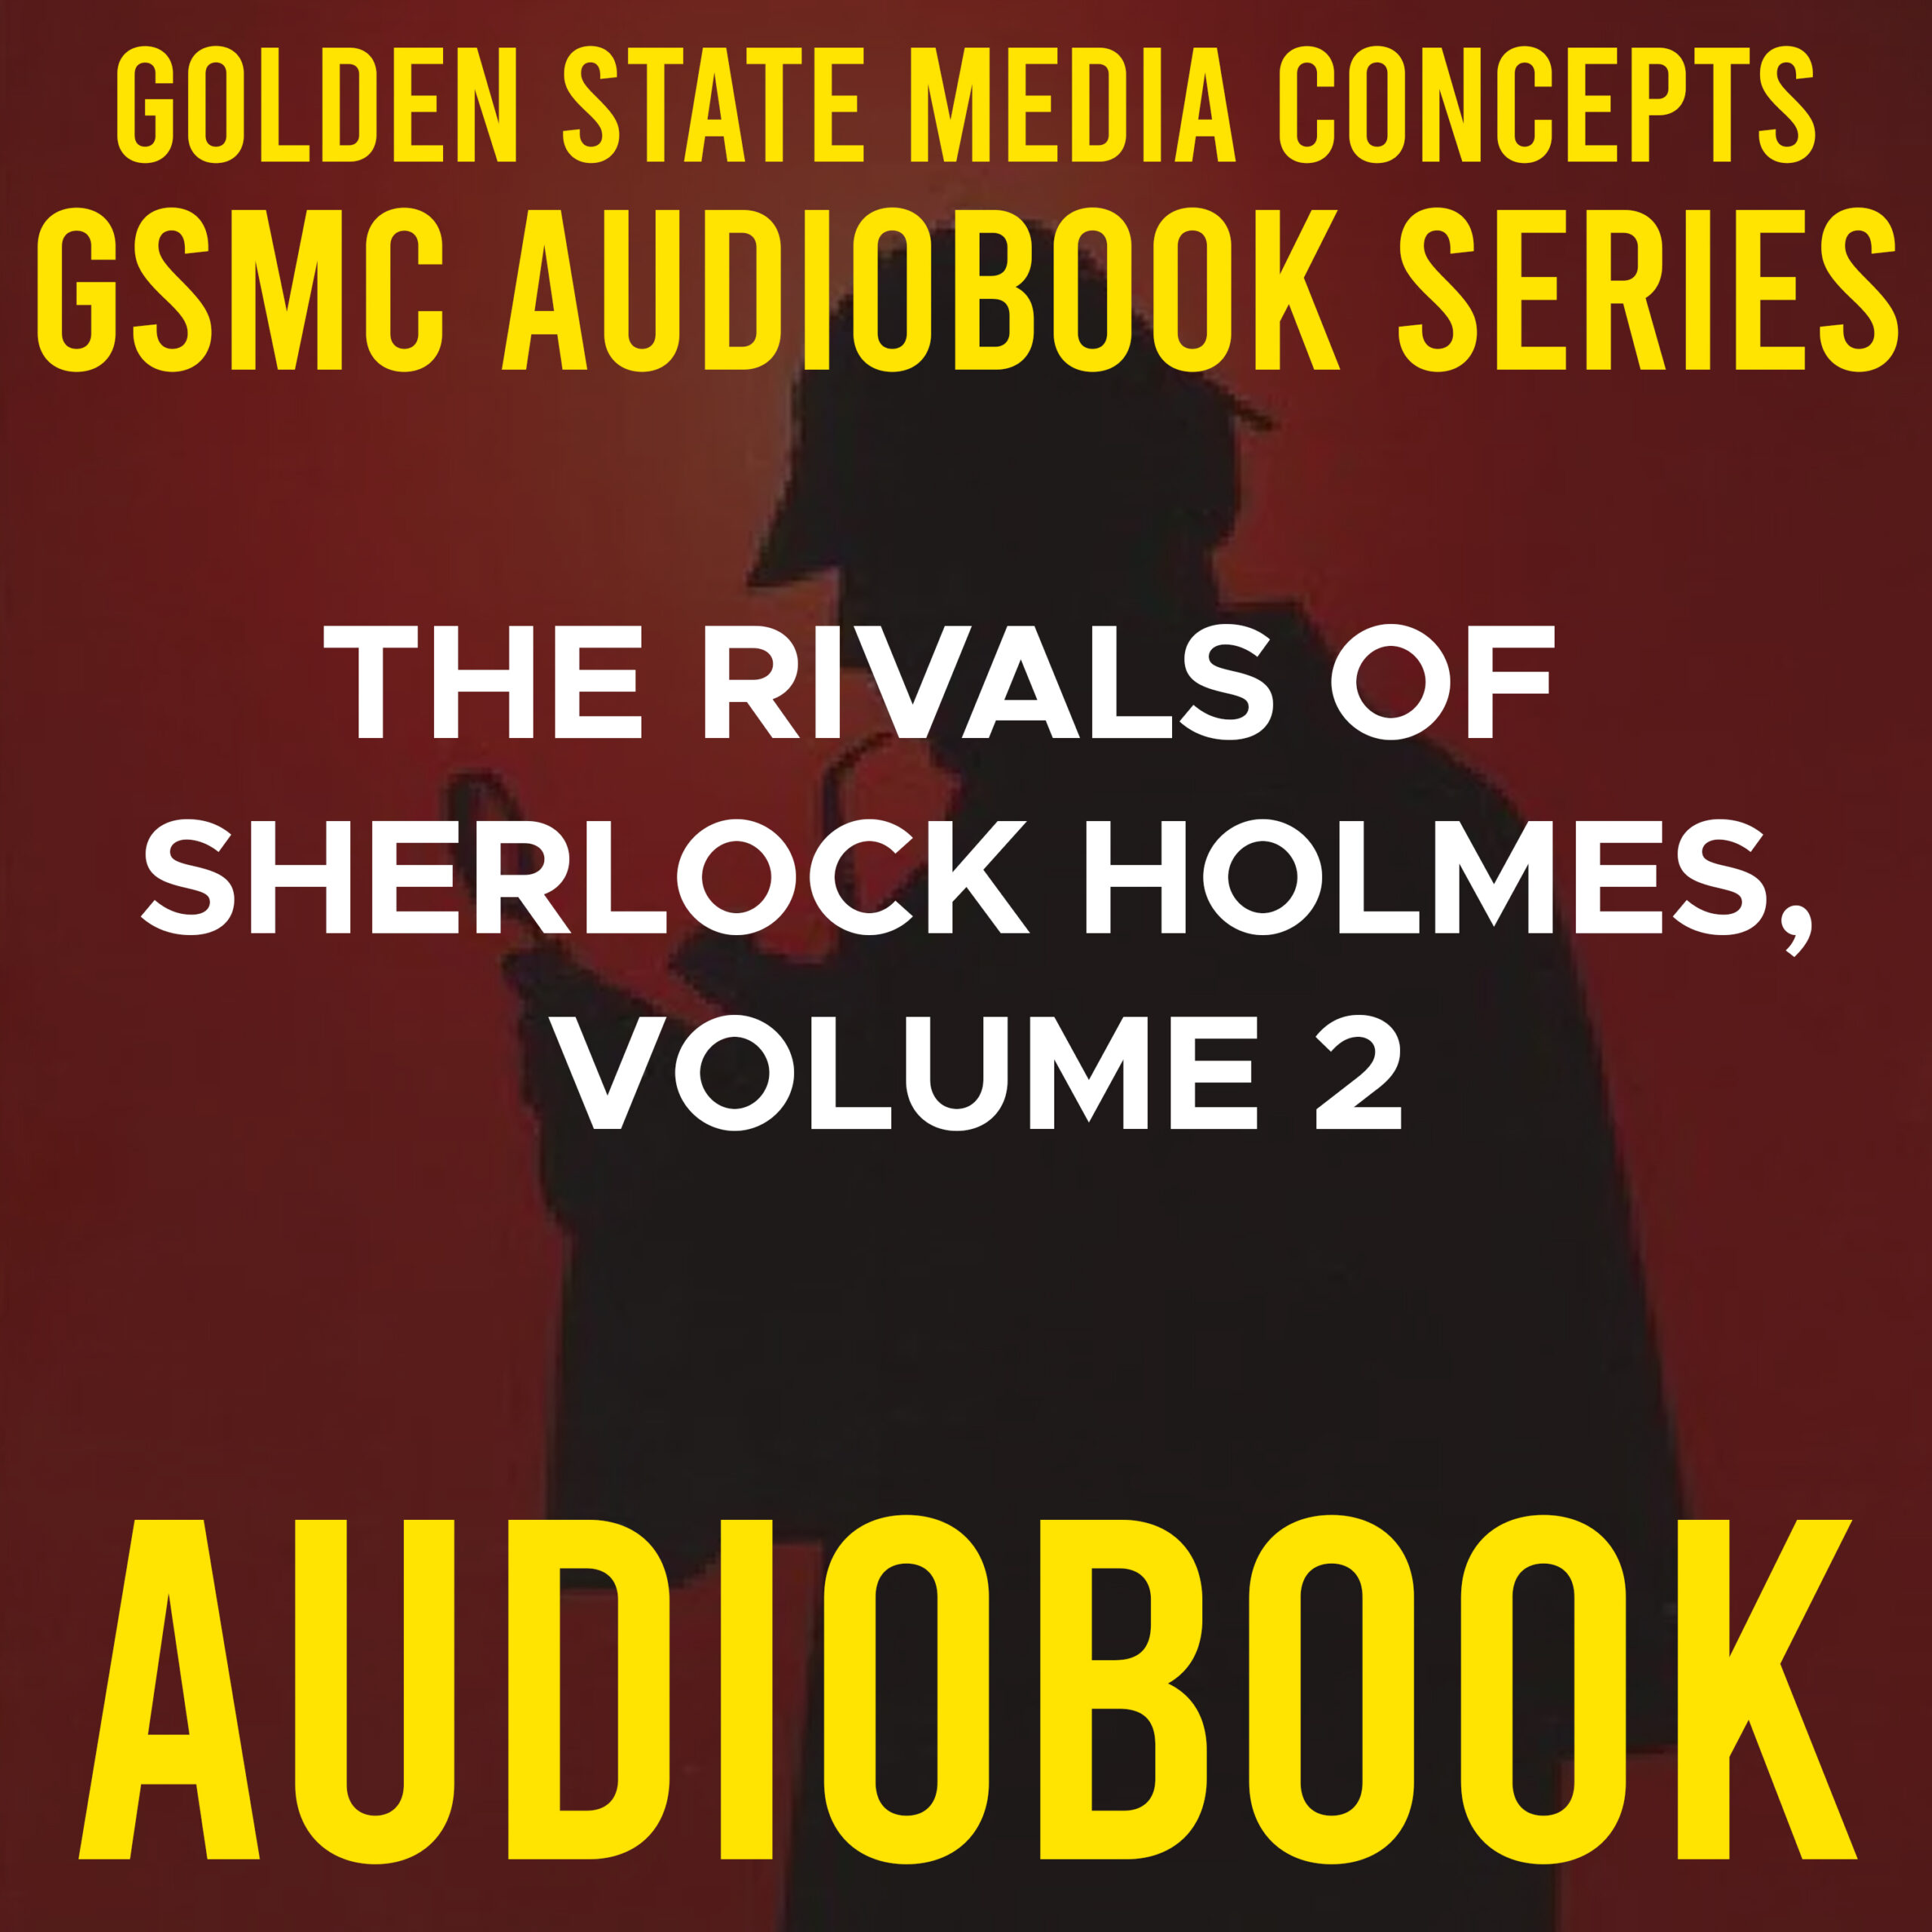 GSMC Audiobook Series: The Rivals of Sherlock Holmes Volume 2